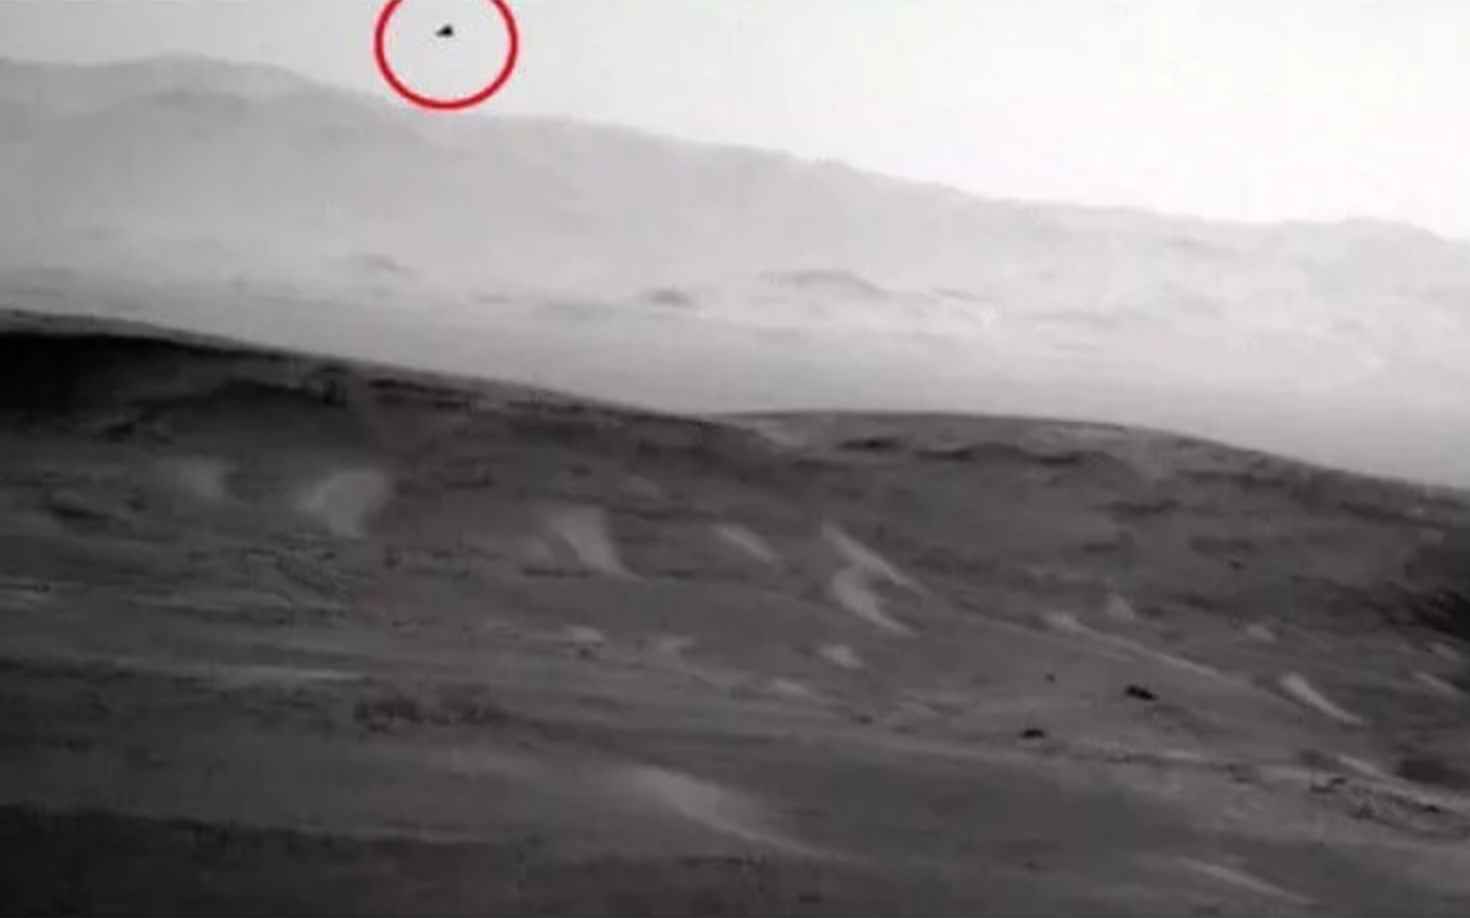 Марсоход «Кьюриосити» находится на Земле. Уфологи обвинили NASA в обмане из-за снимков с Марса